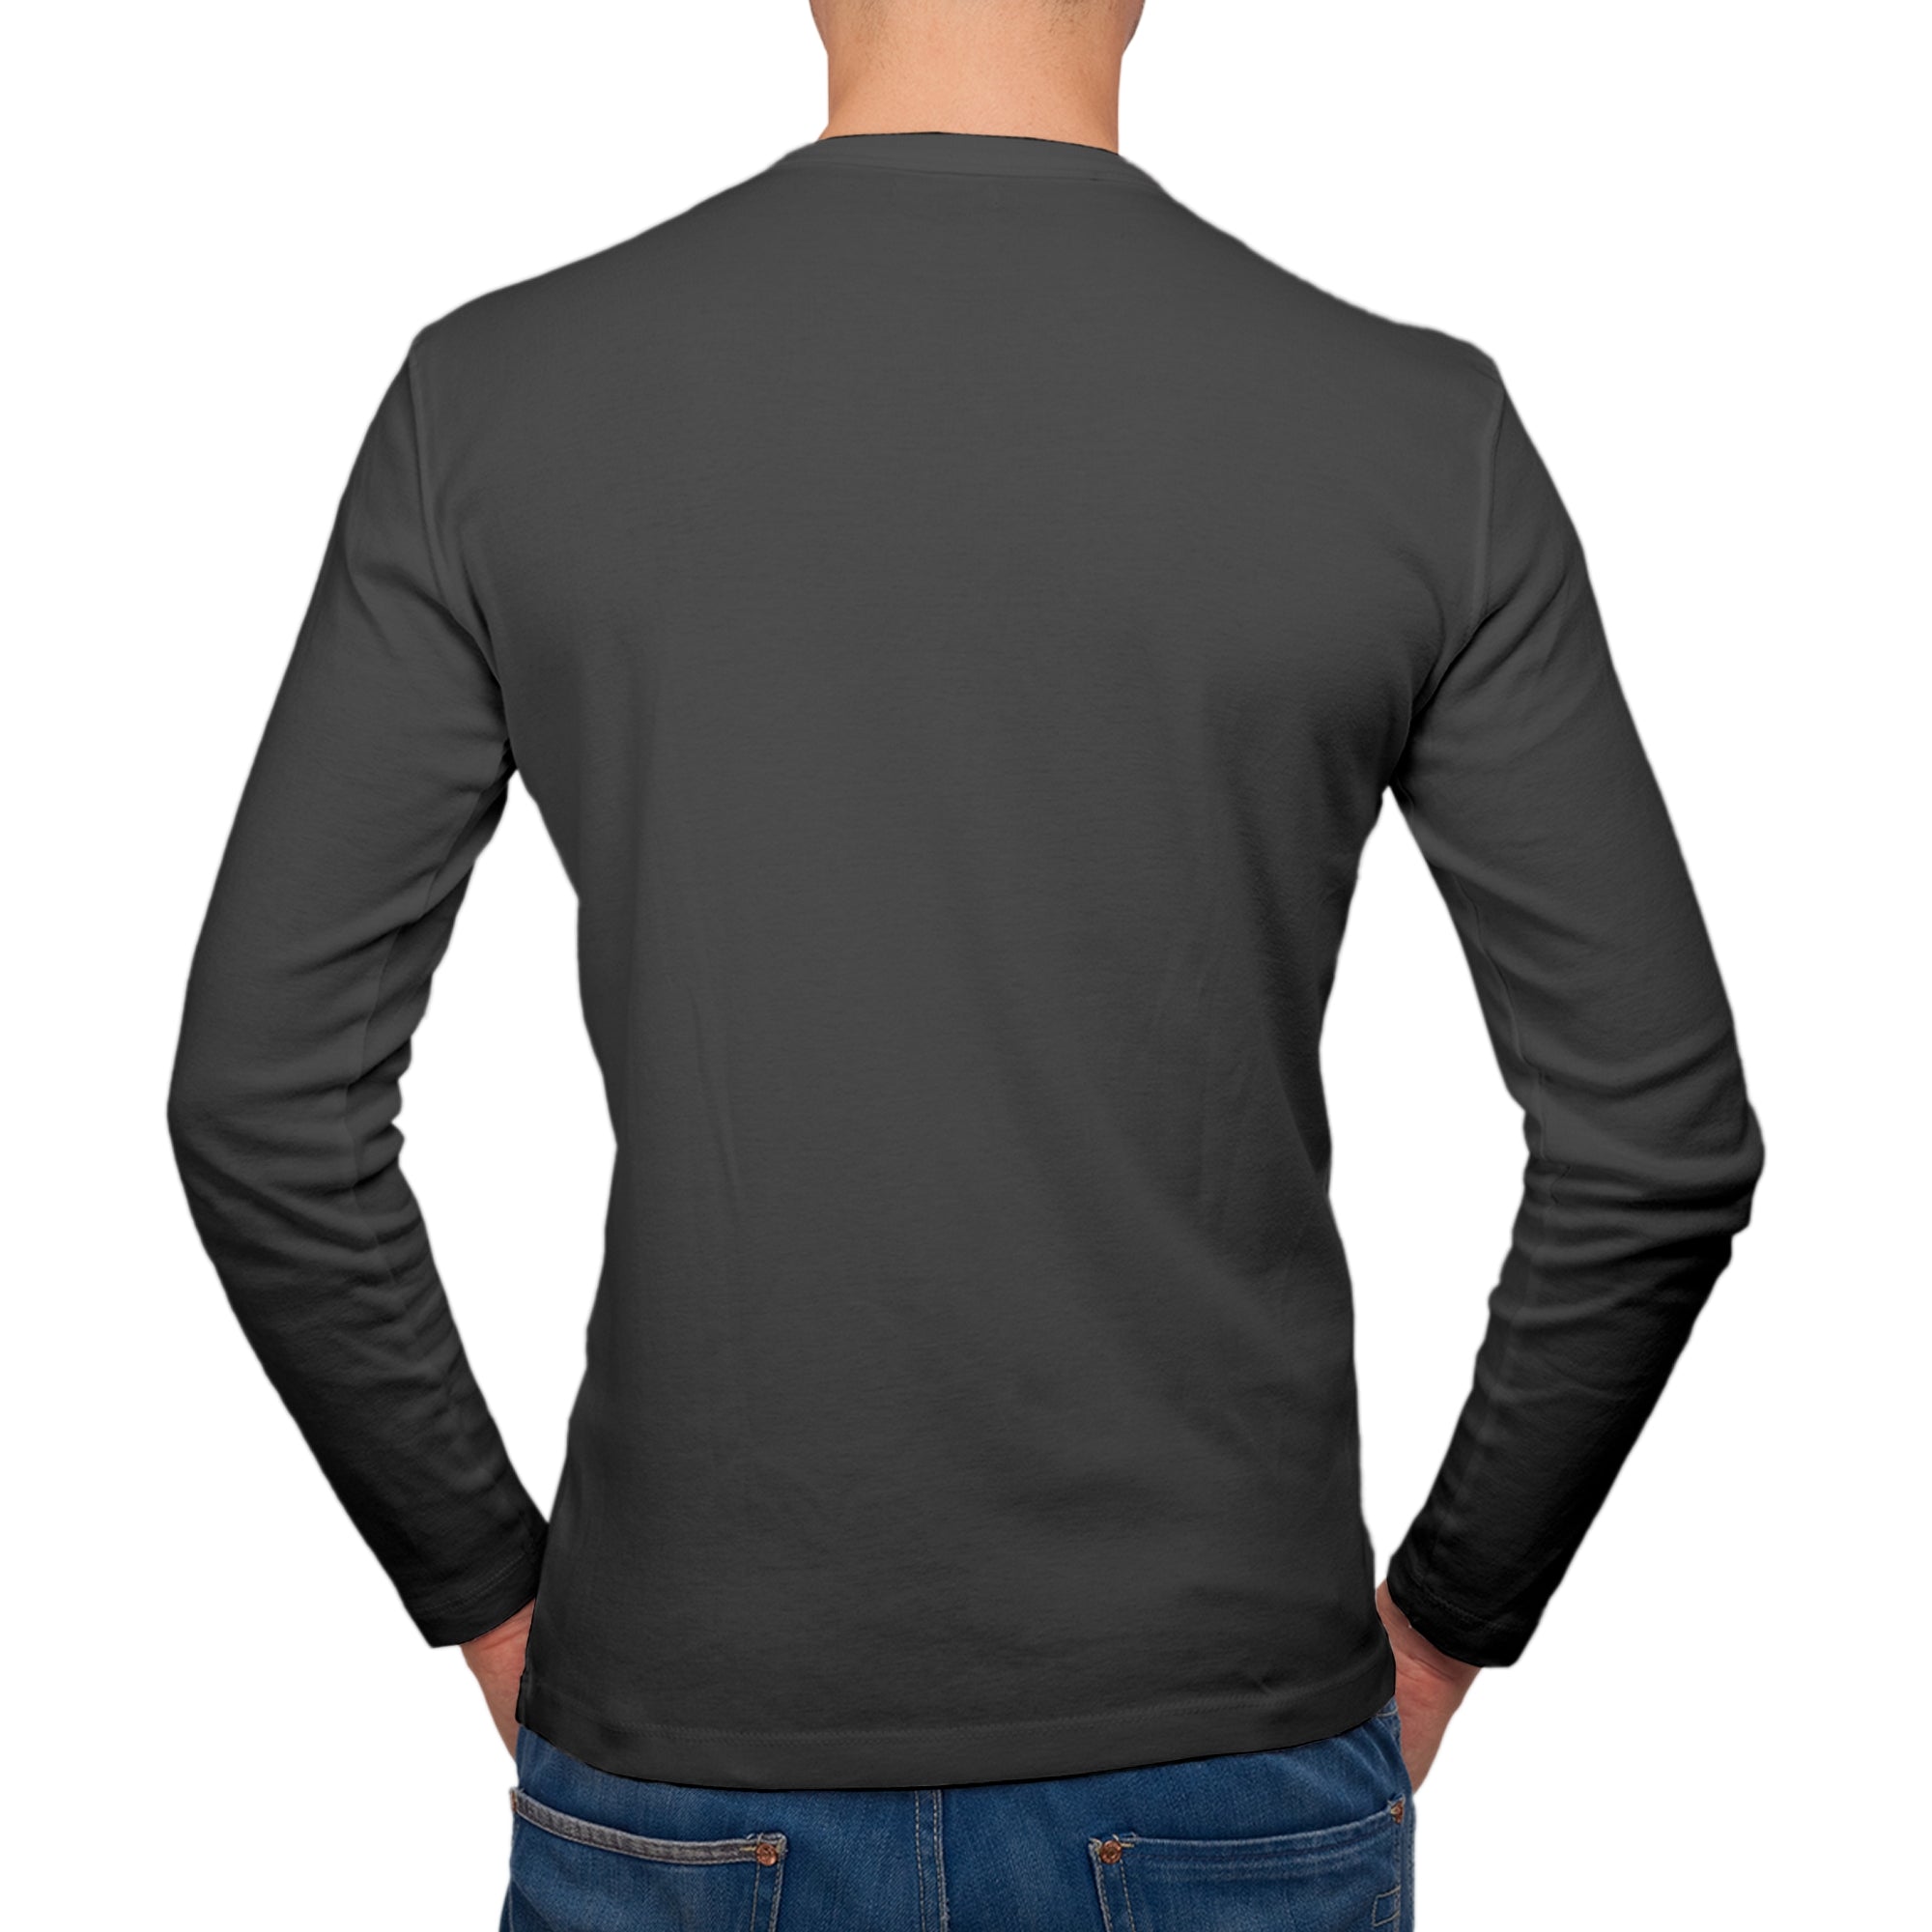 Full Sleeves Charcoal Grey T-Shirt For Men